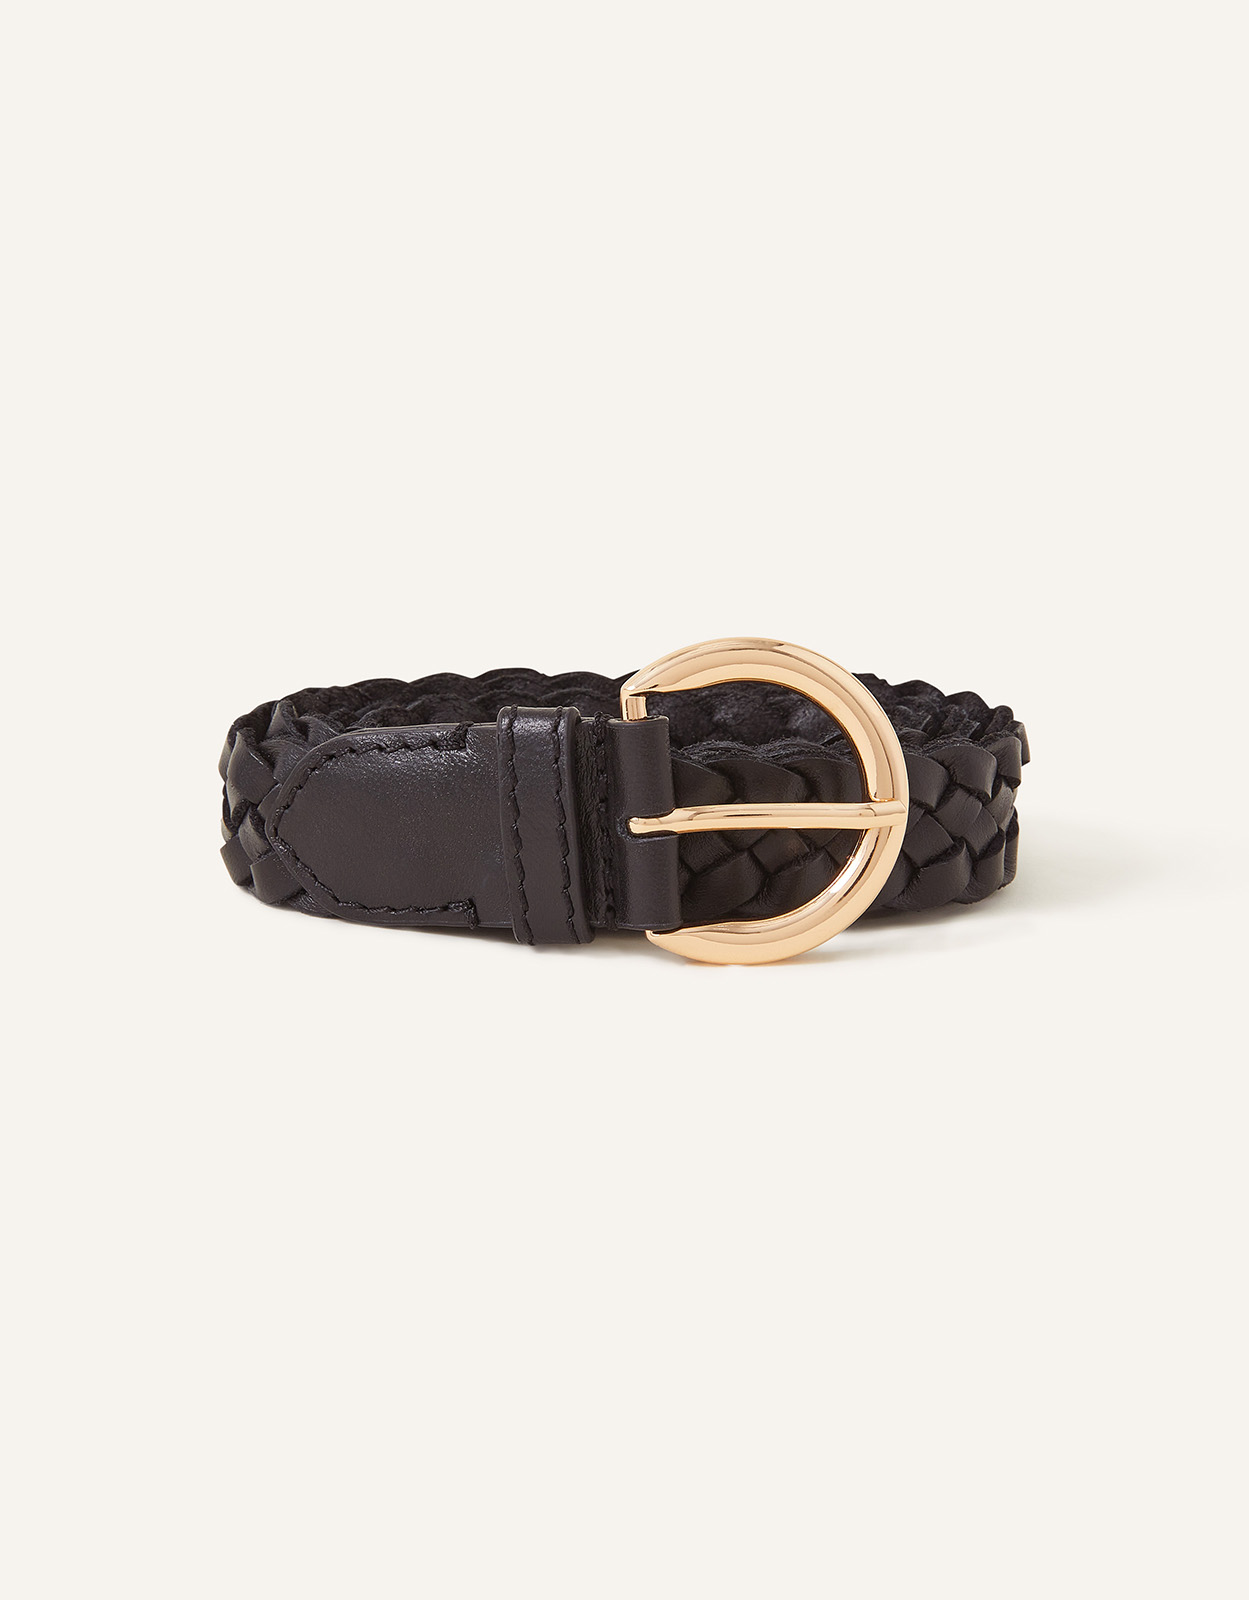 Accessorize Women's Leather Plaited Belt Black, Size: S